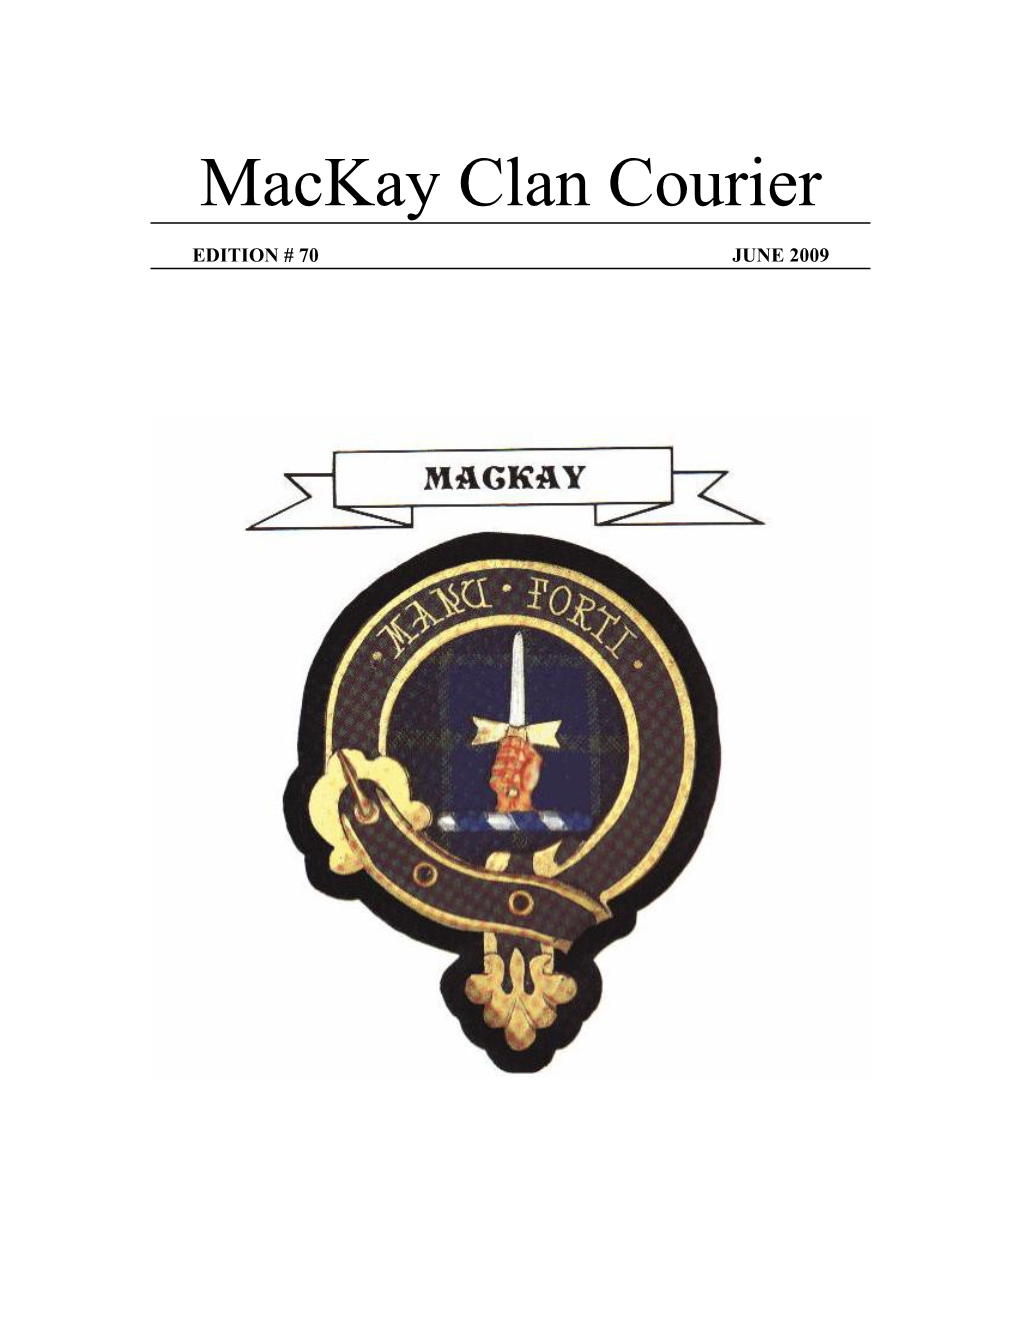 Mackay Clan Grand Council s2